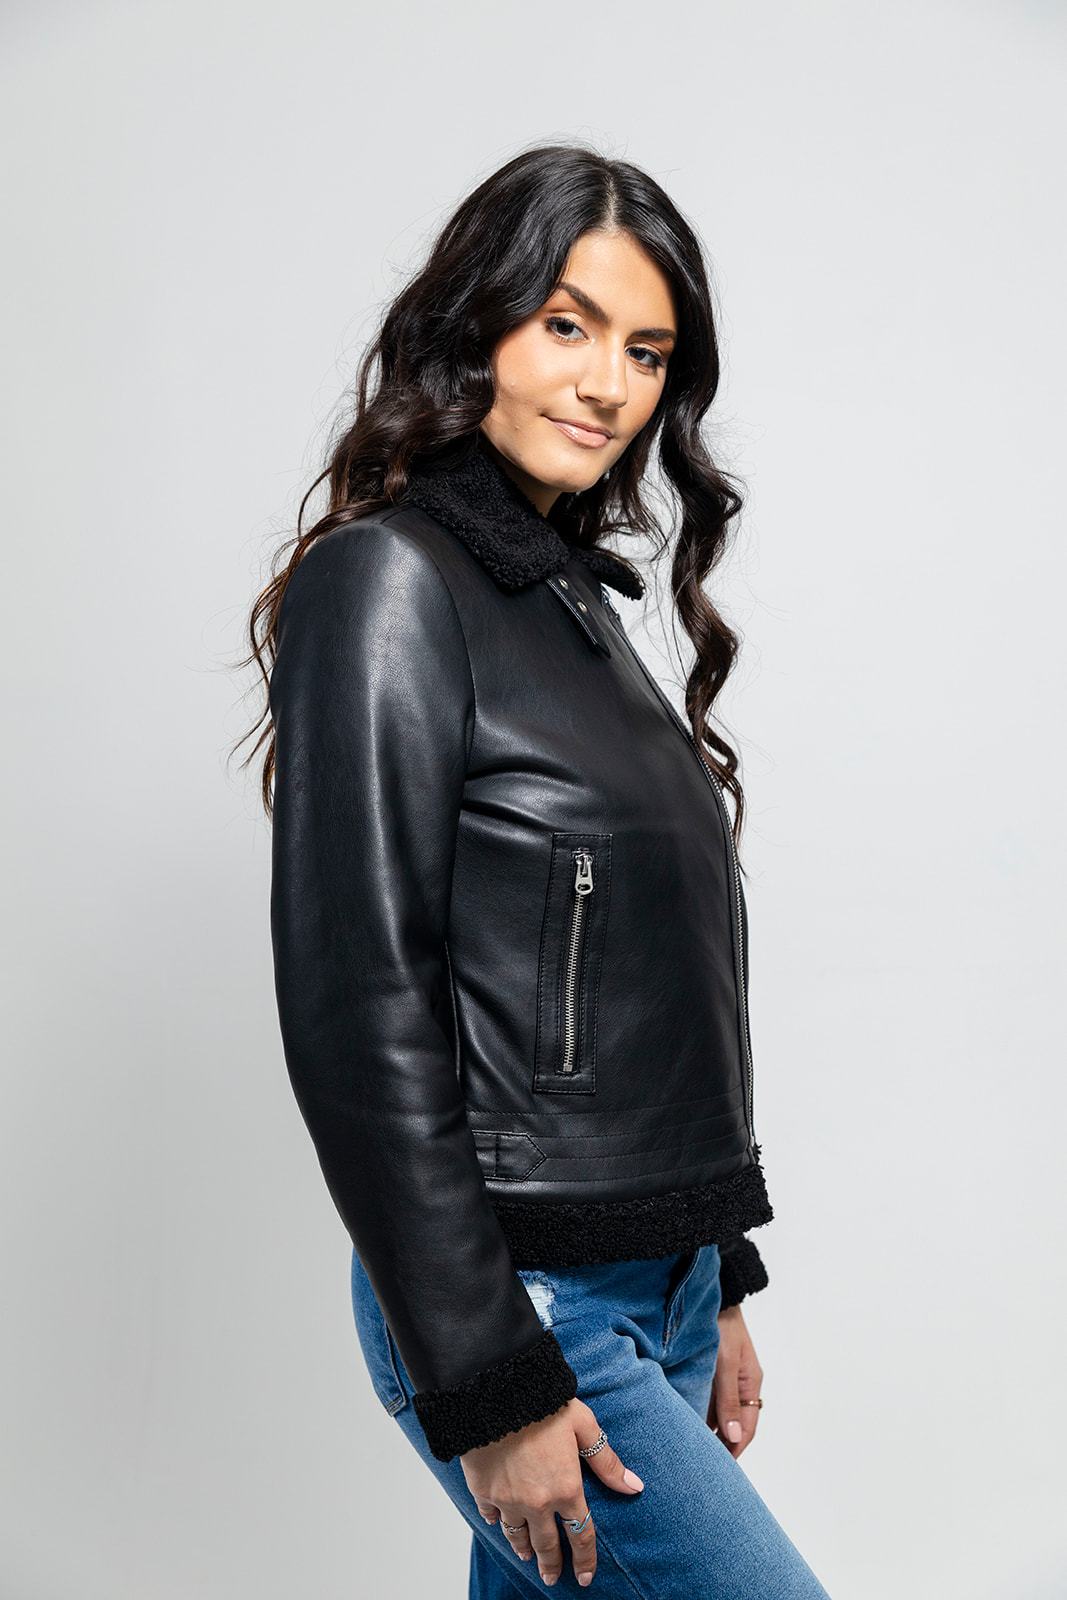 Chelsea - Women's Faux Leather Jacket (POS) Women's Fashion Leather Jacket Whet Blu NYC   